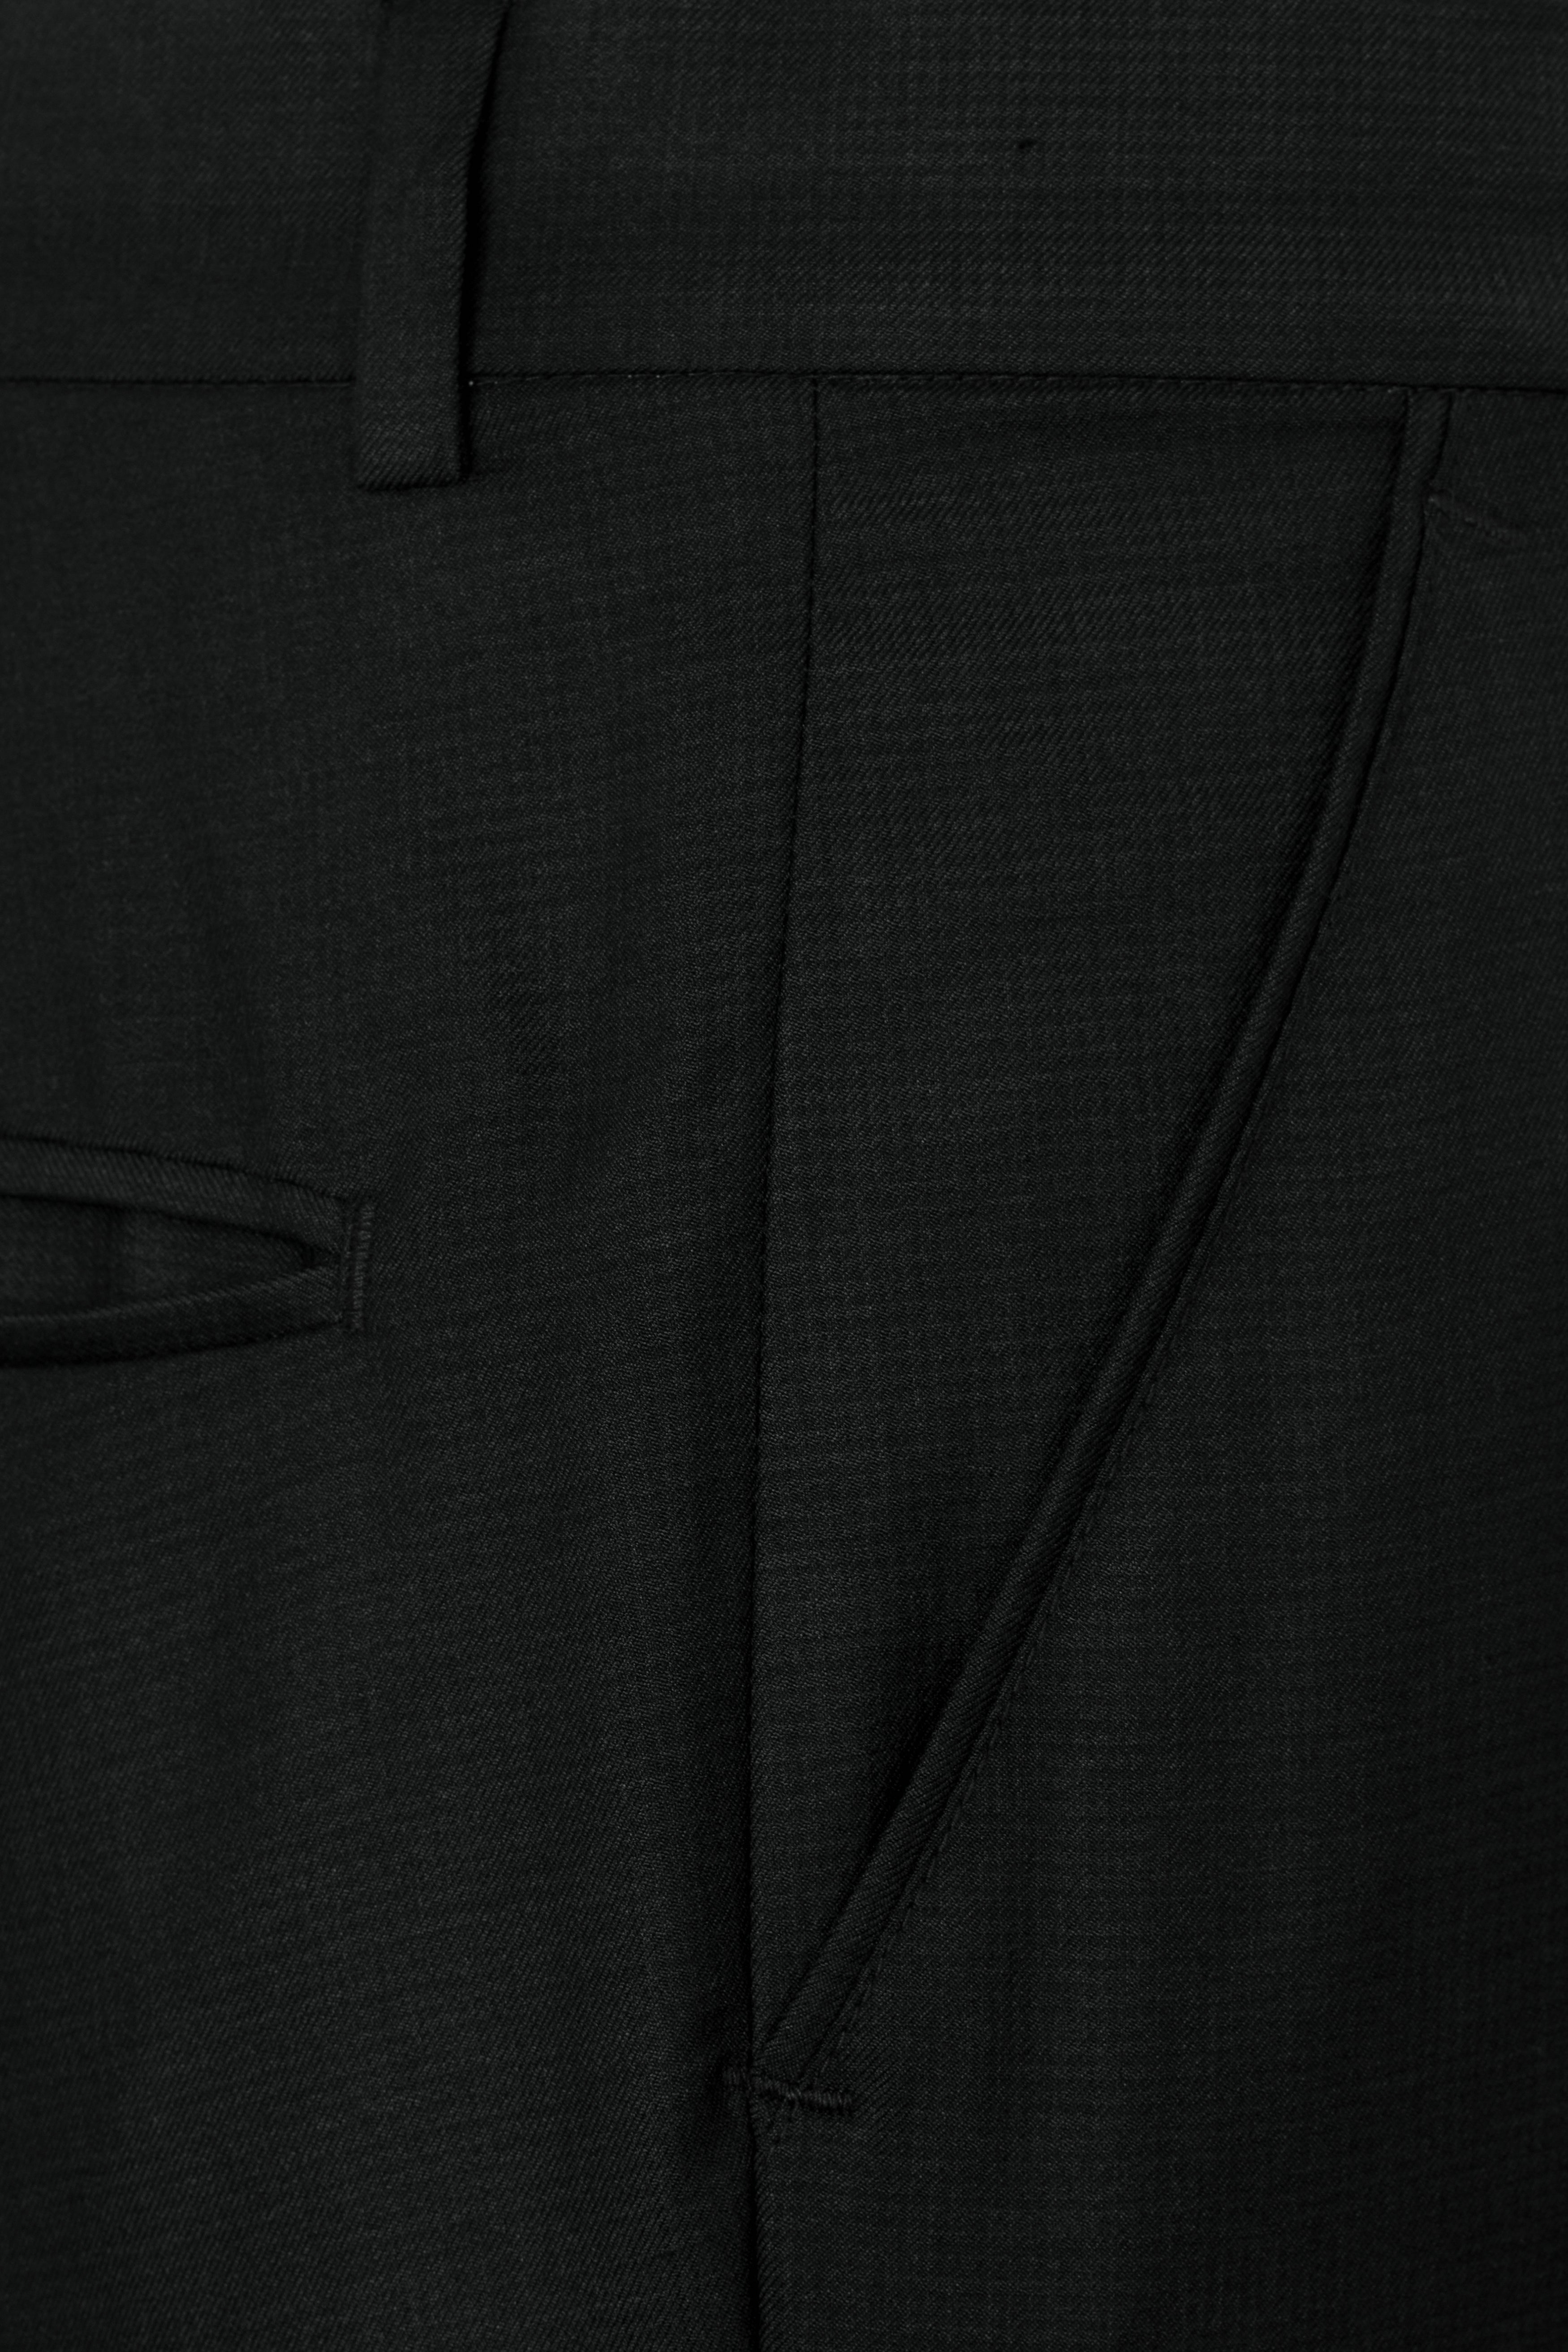 Jade Black Wool Rich Bandhgala Suit ST2818-BG-36, ST2818-BG-38, ST2818-BG-40, ST2818-BG-42, ST2818-BG-44, ST2818-BG-46, ST2818-BG-48, ST2818-BG-50, ST2818-BG-52, ST2818-BG-54, ST2818-BG-56, ST2818-BG-58, ST2818-BG-60